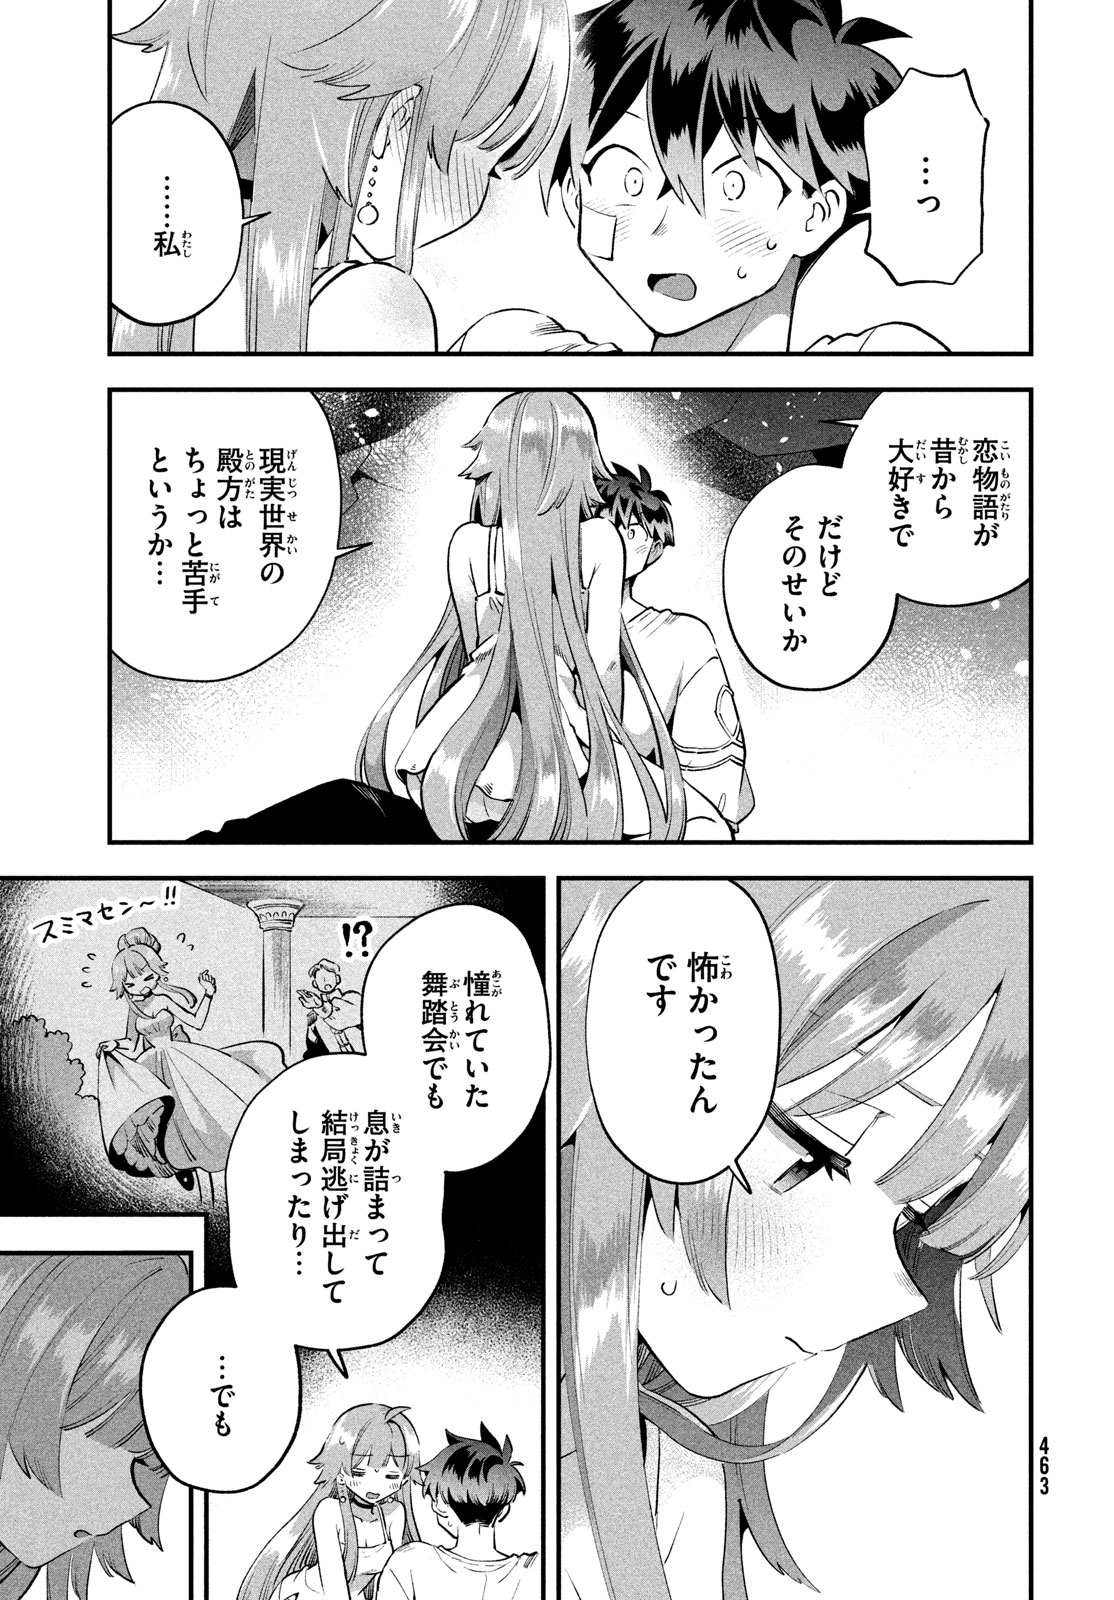 7-nin no Nemuri Hime - Chapter 51 - Page 7